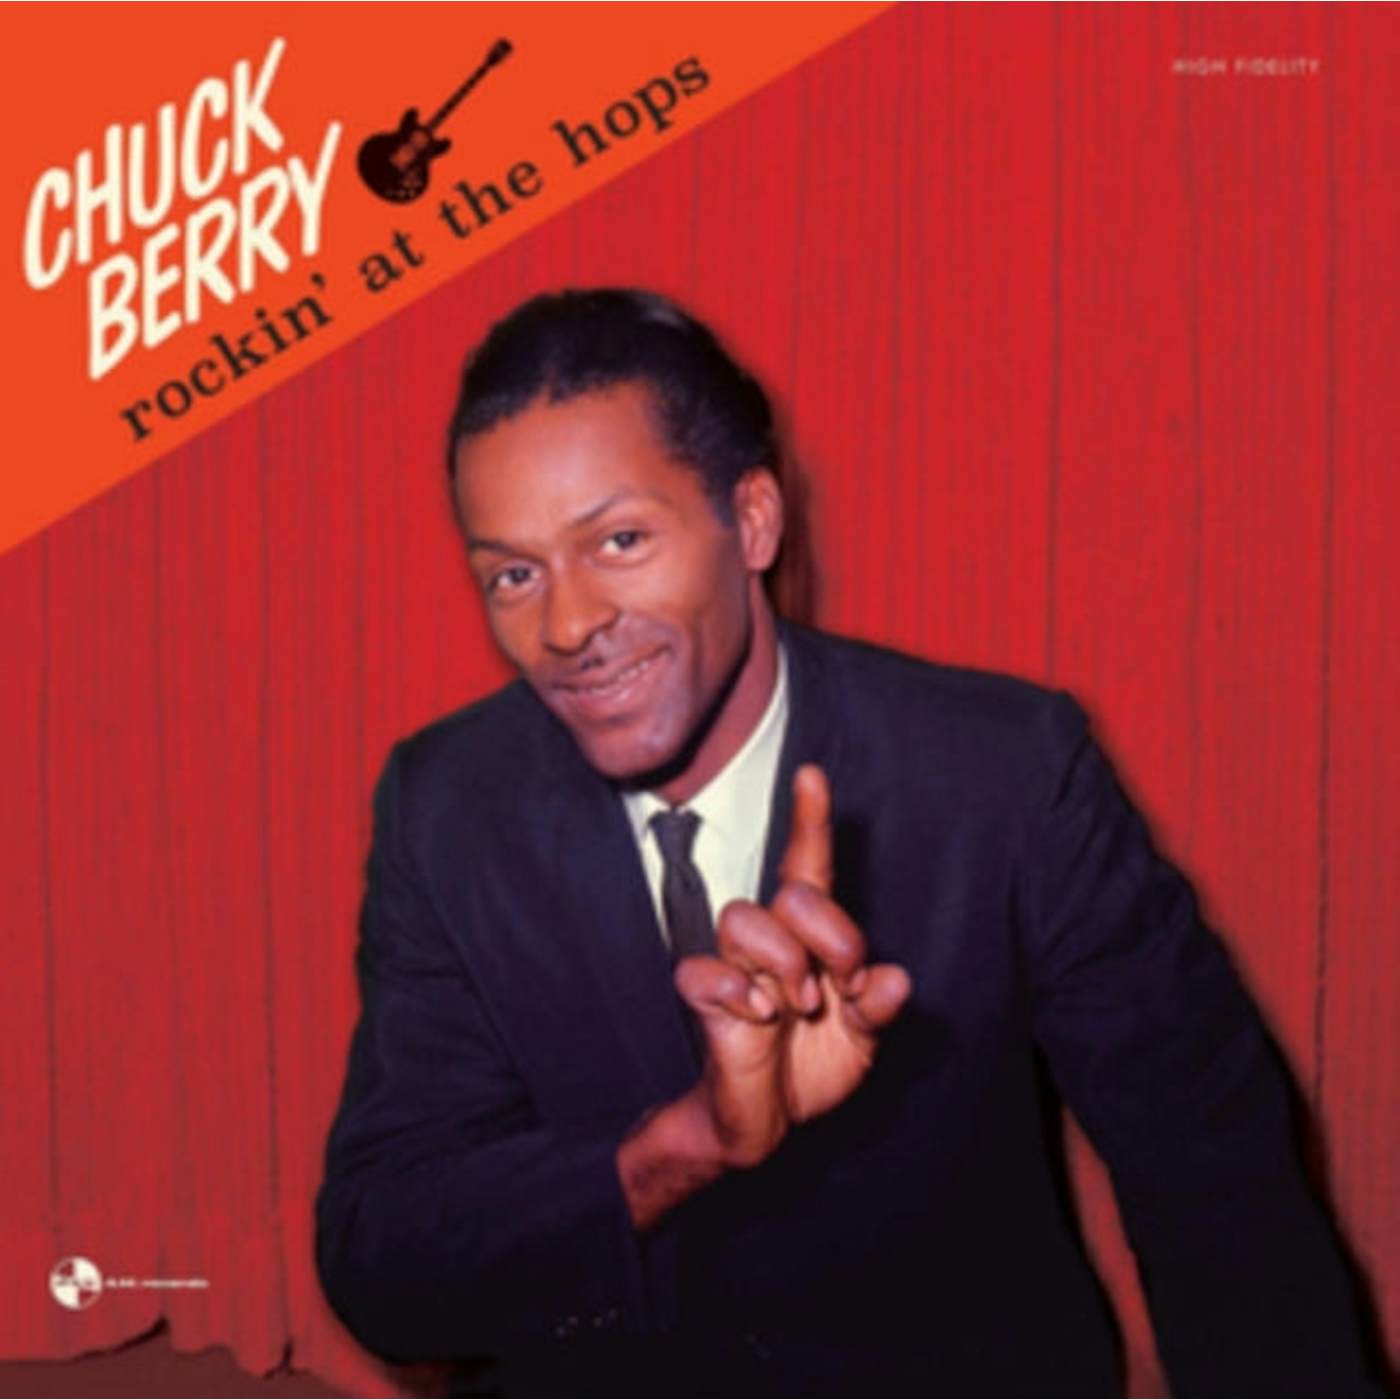 Chuck Berry LP - Rockin' At The Hops (Vinyl)